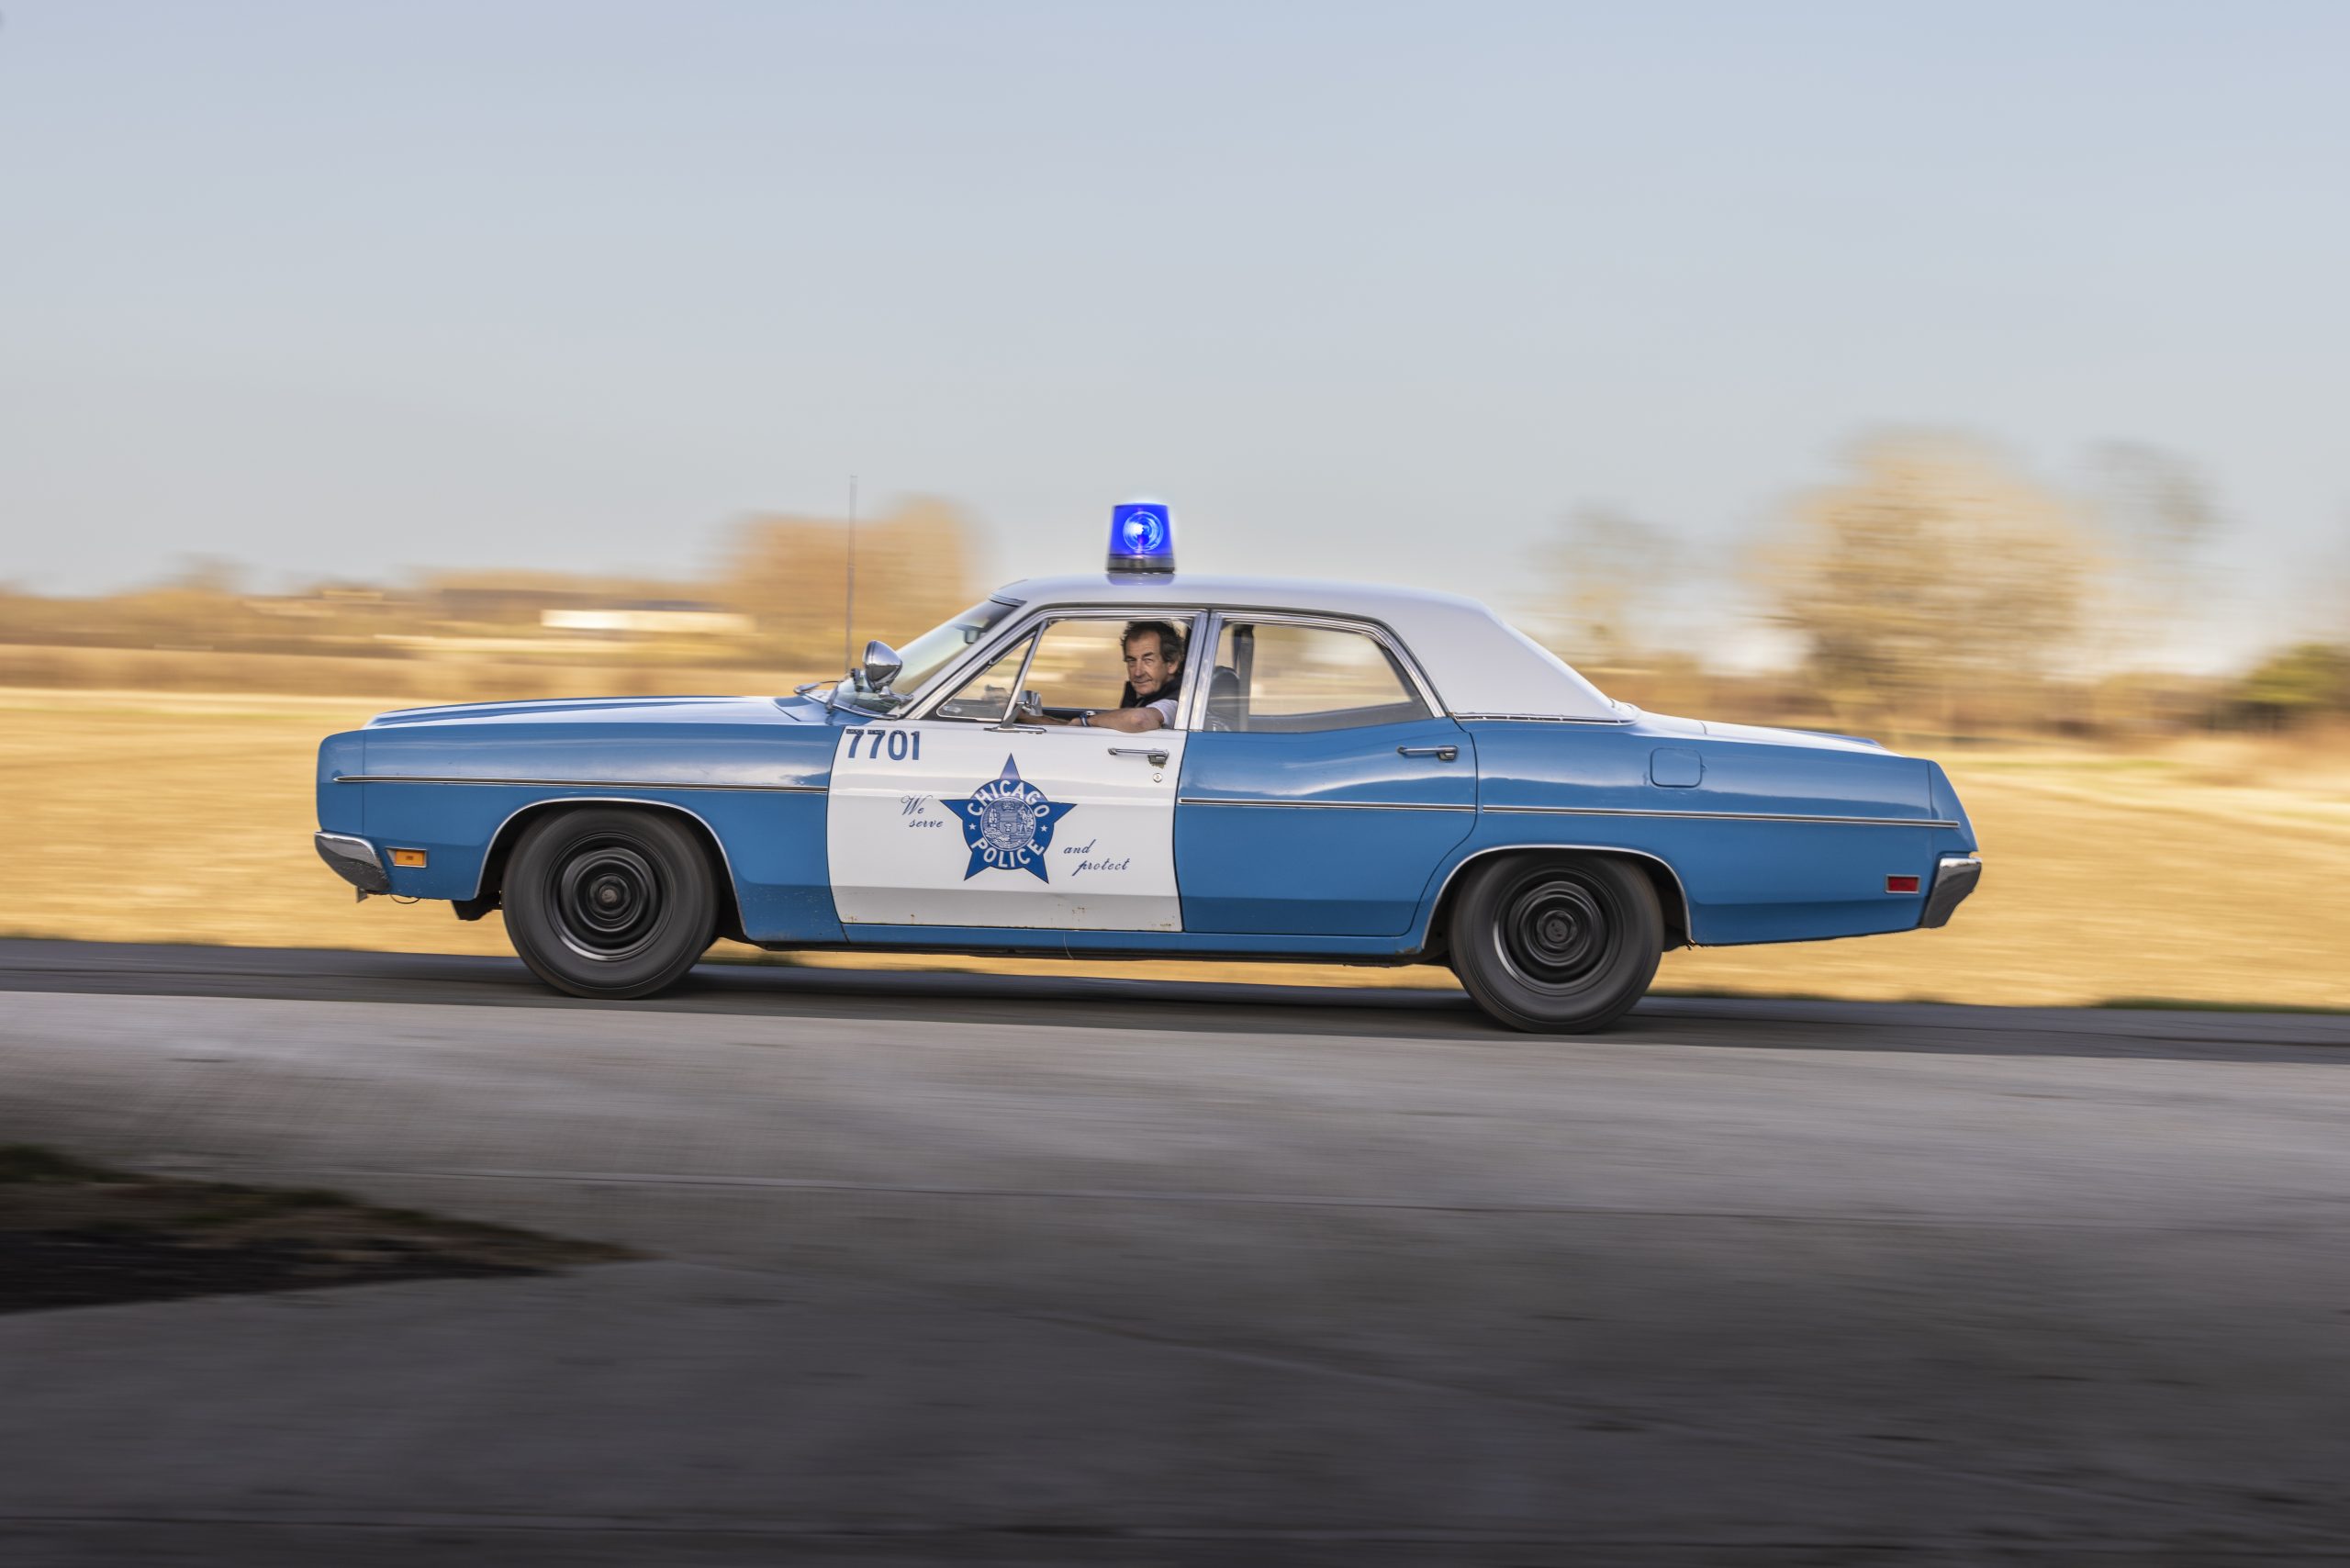 Steve parrish Ford Galaxy police car